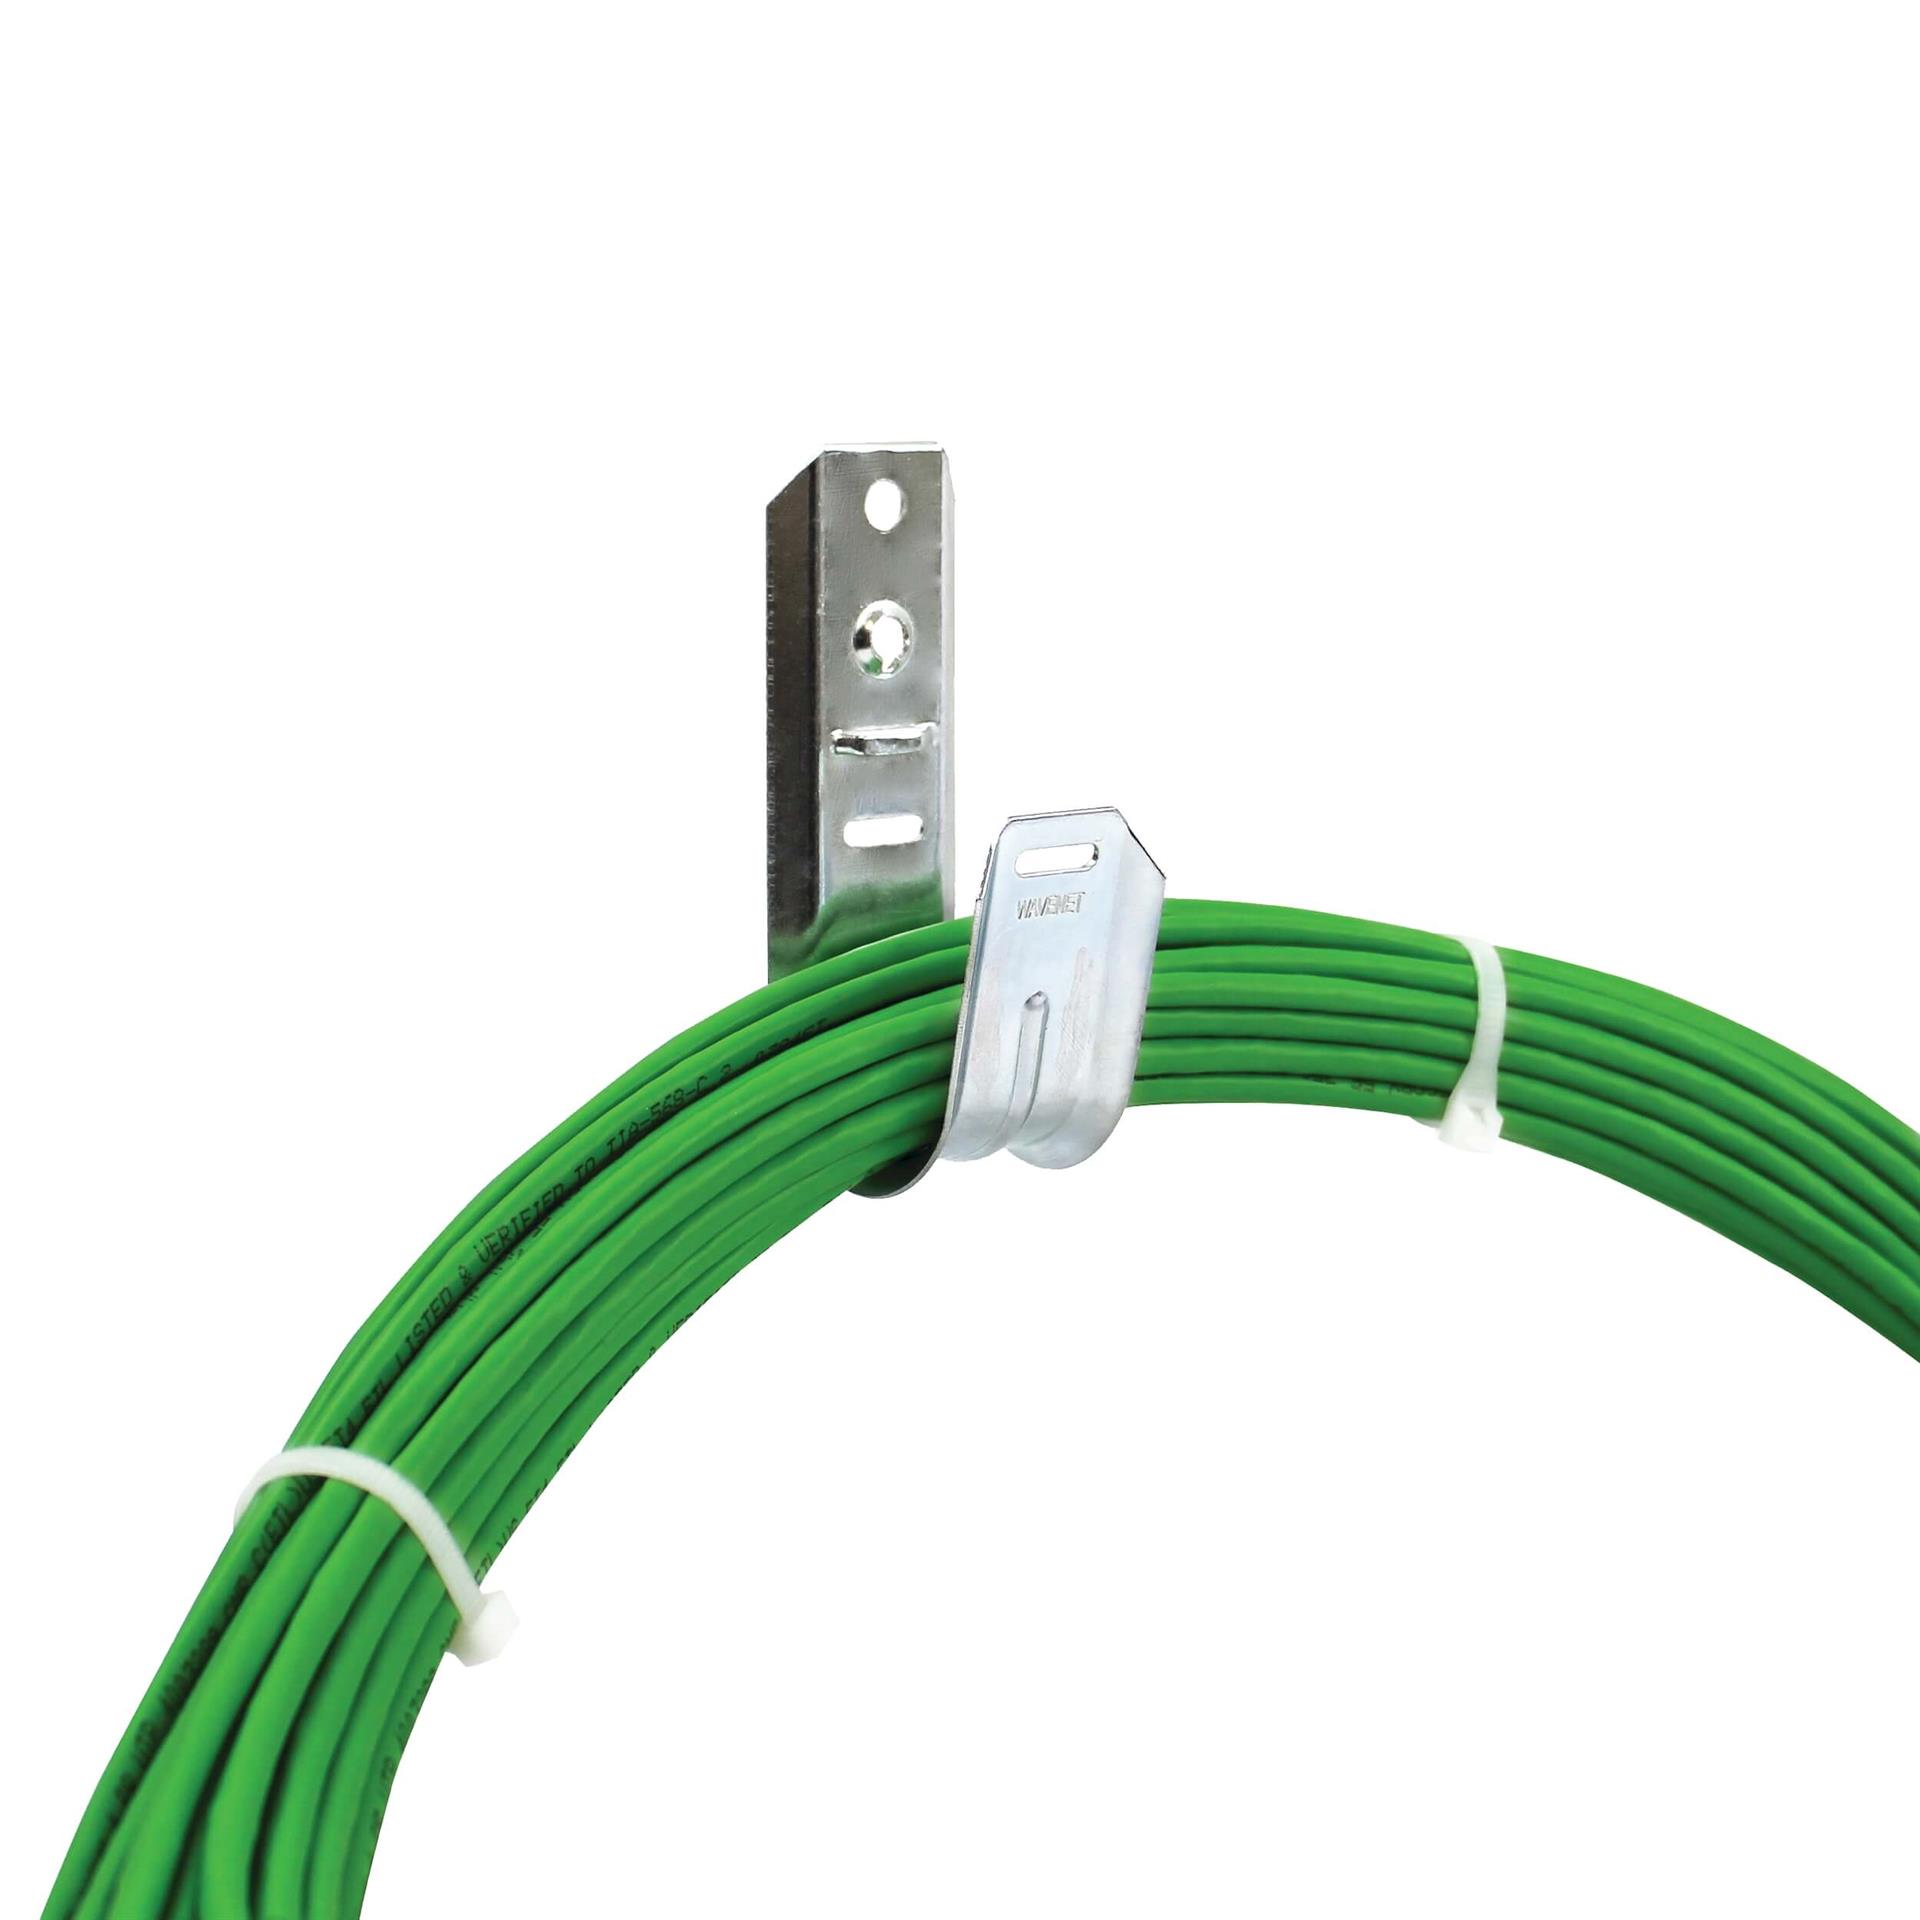 Wavenet 3063-n 1.31 in. J-Hook Cable Support Pack of 25